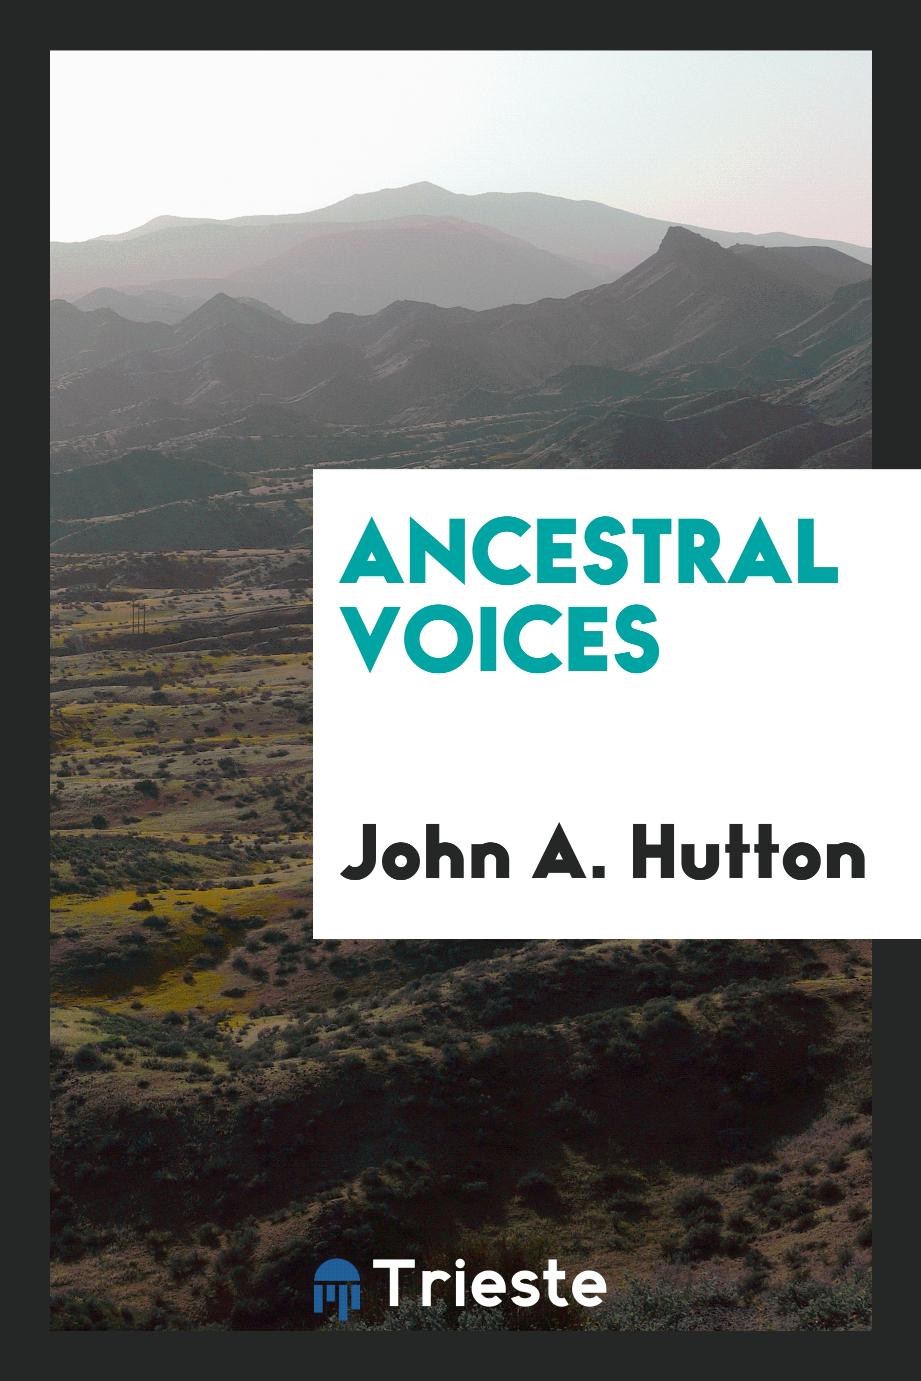 Ancestral voices